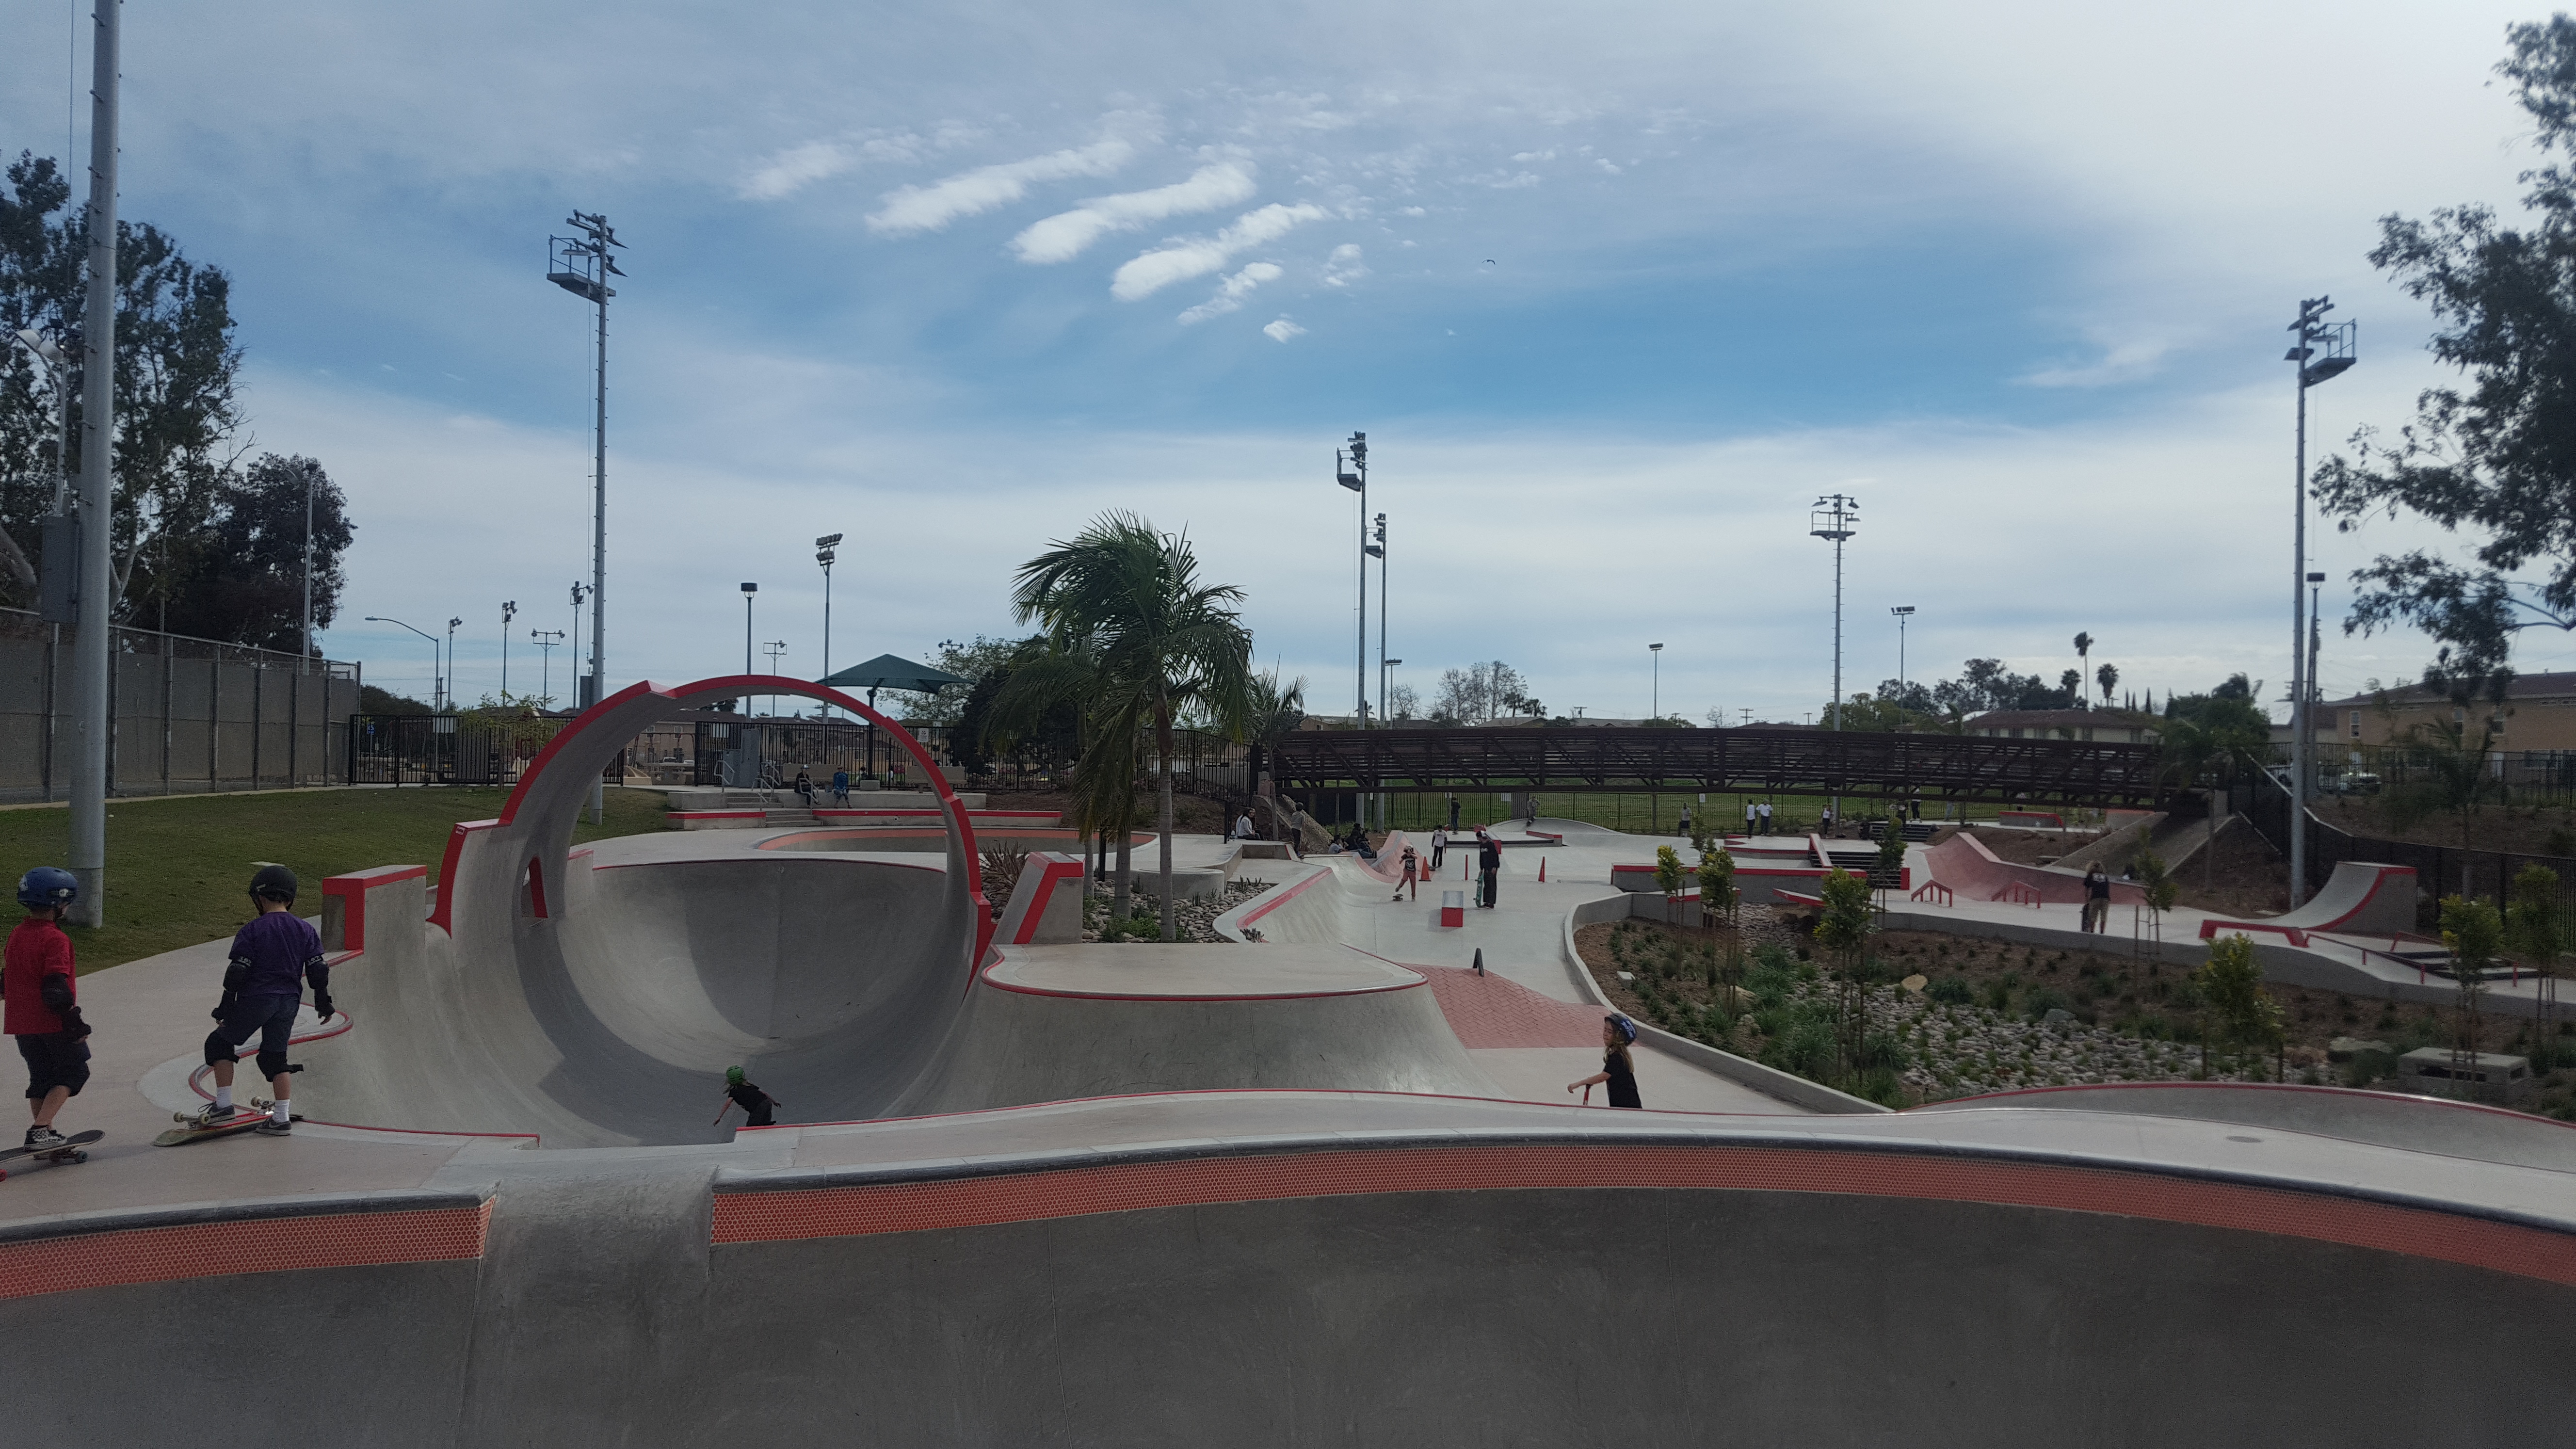 View of Linda Vista Skateboard Park